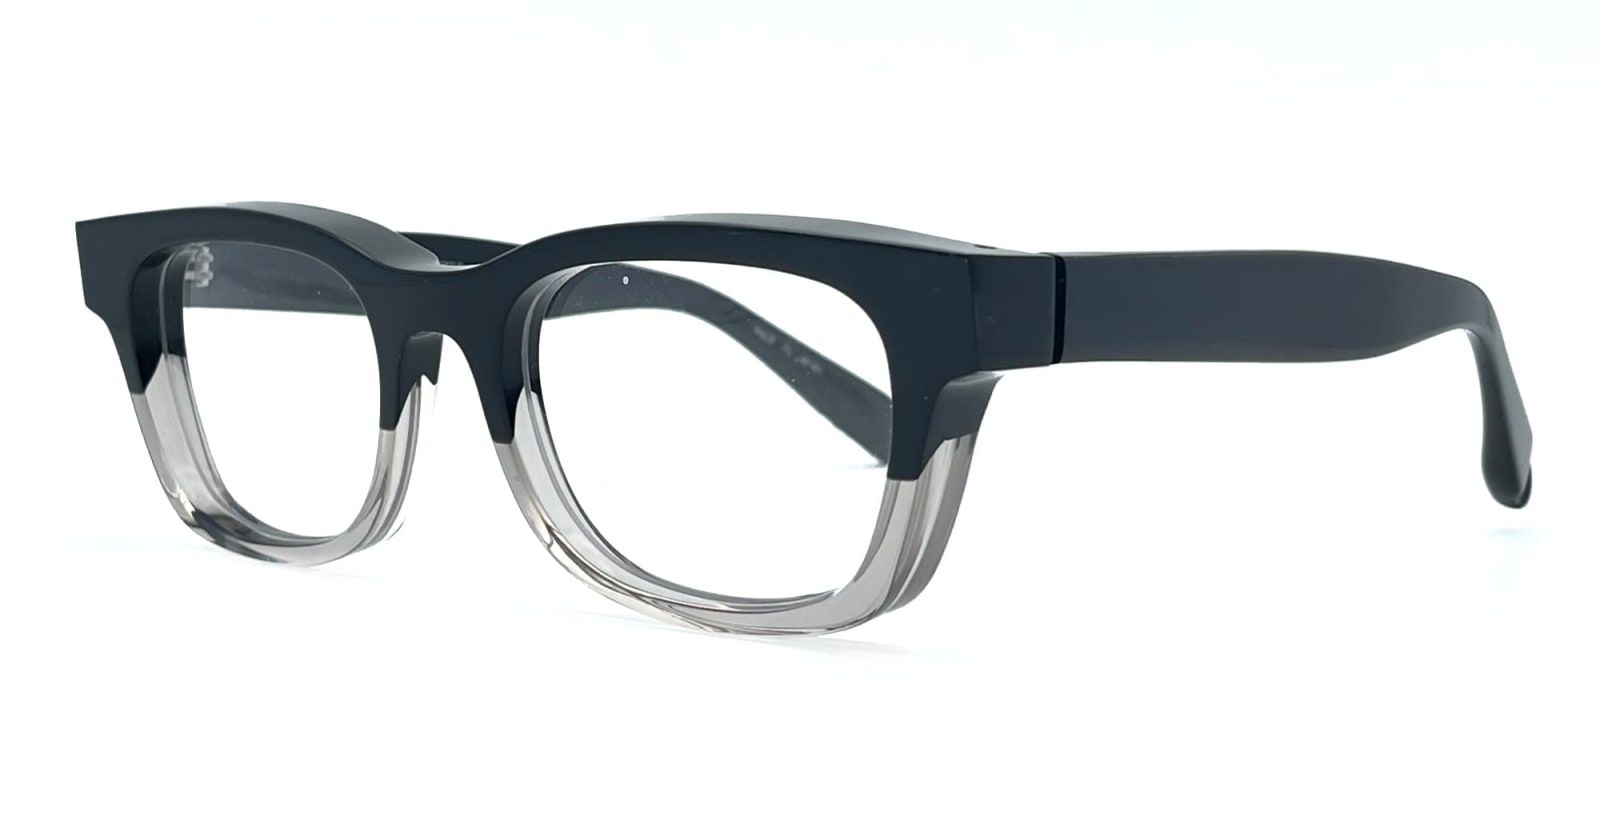 Rf-150 - Black Two-tone Glasses